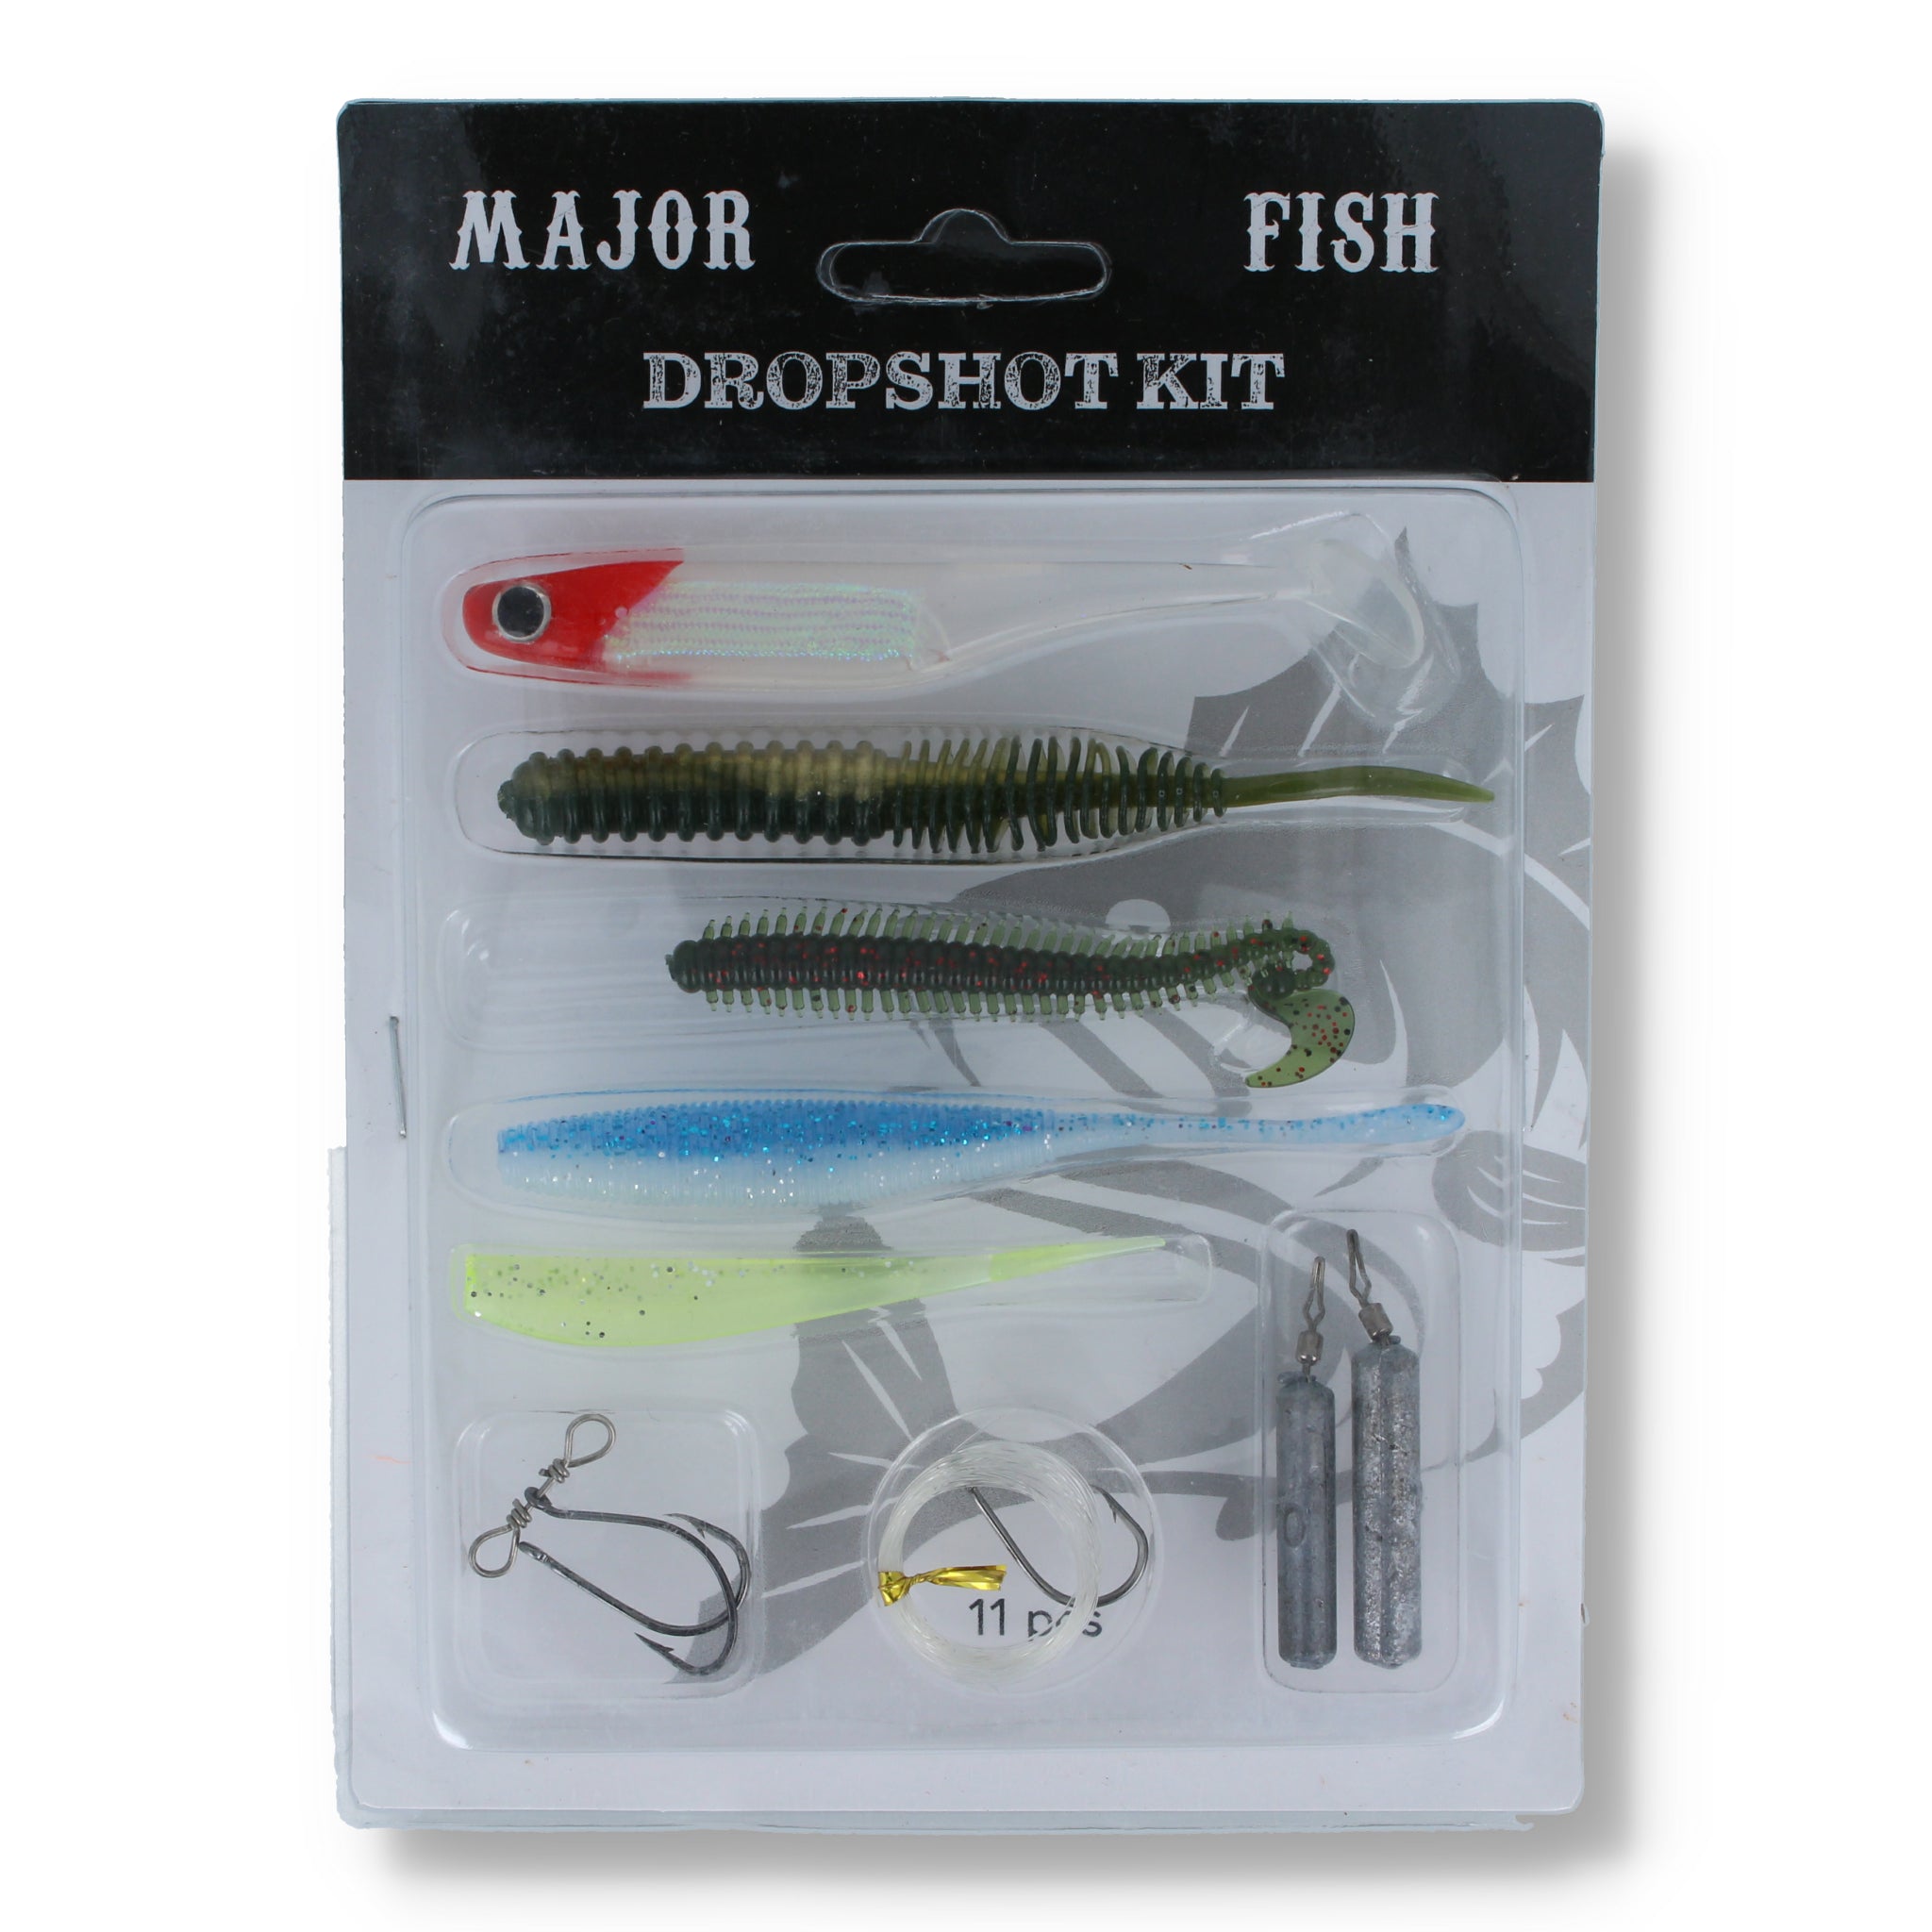 Major Fish Dropshot Kit